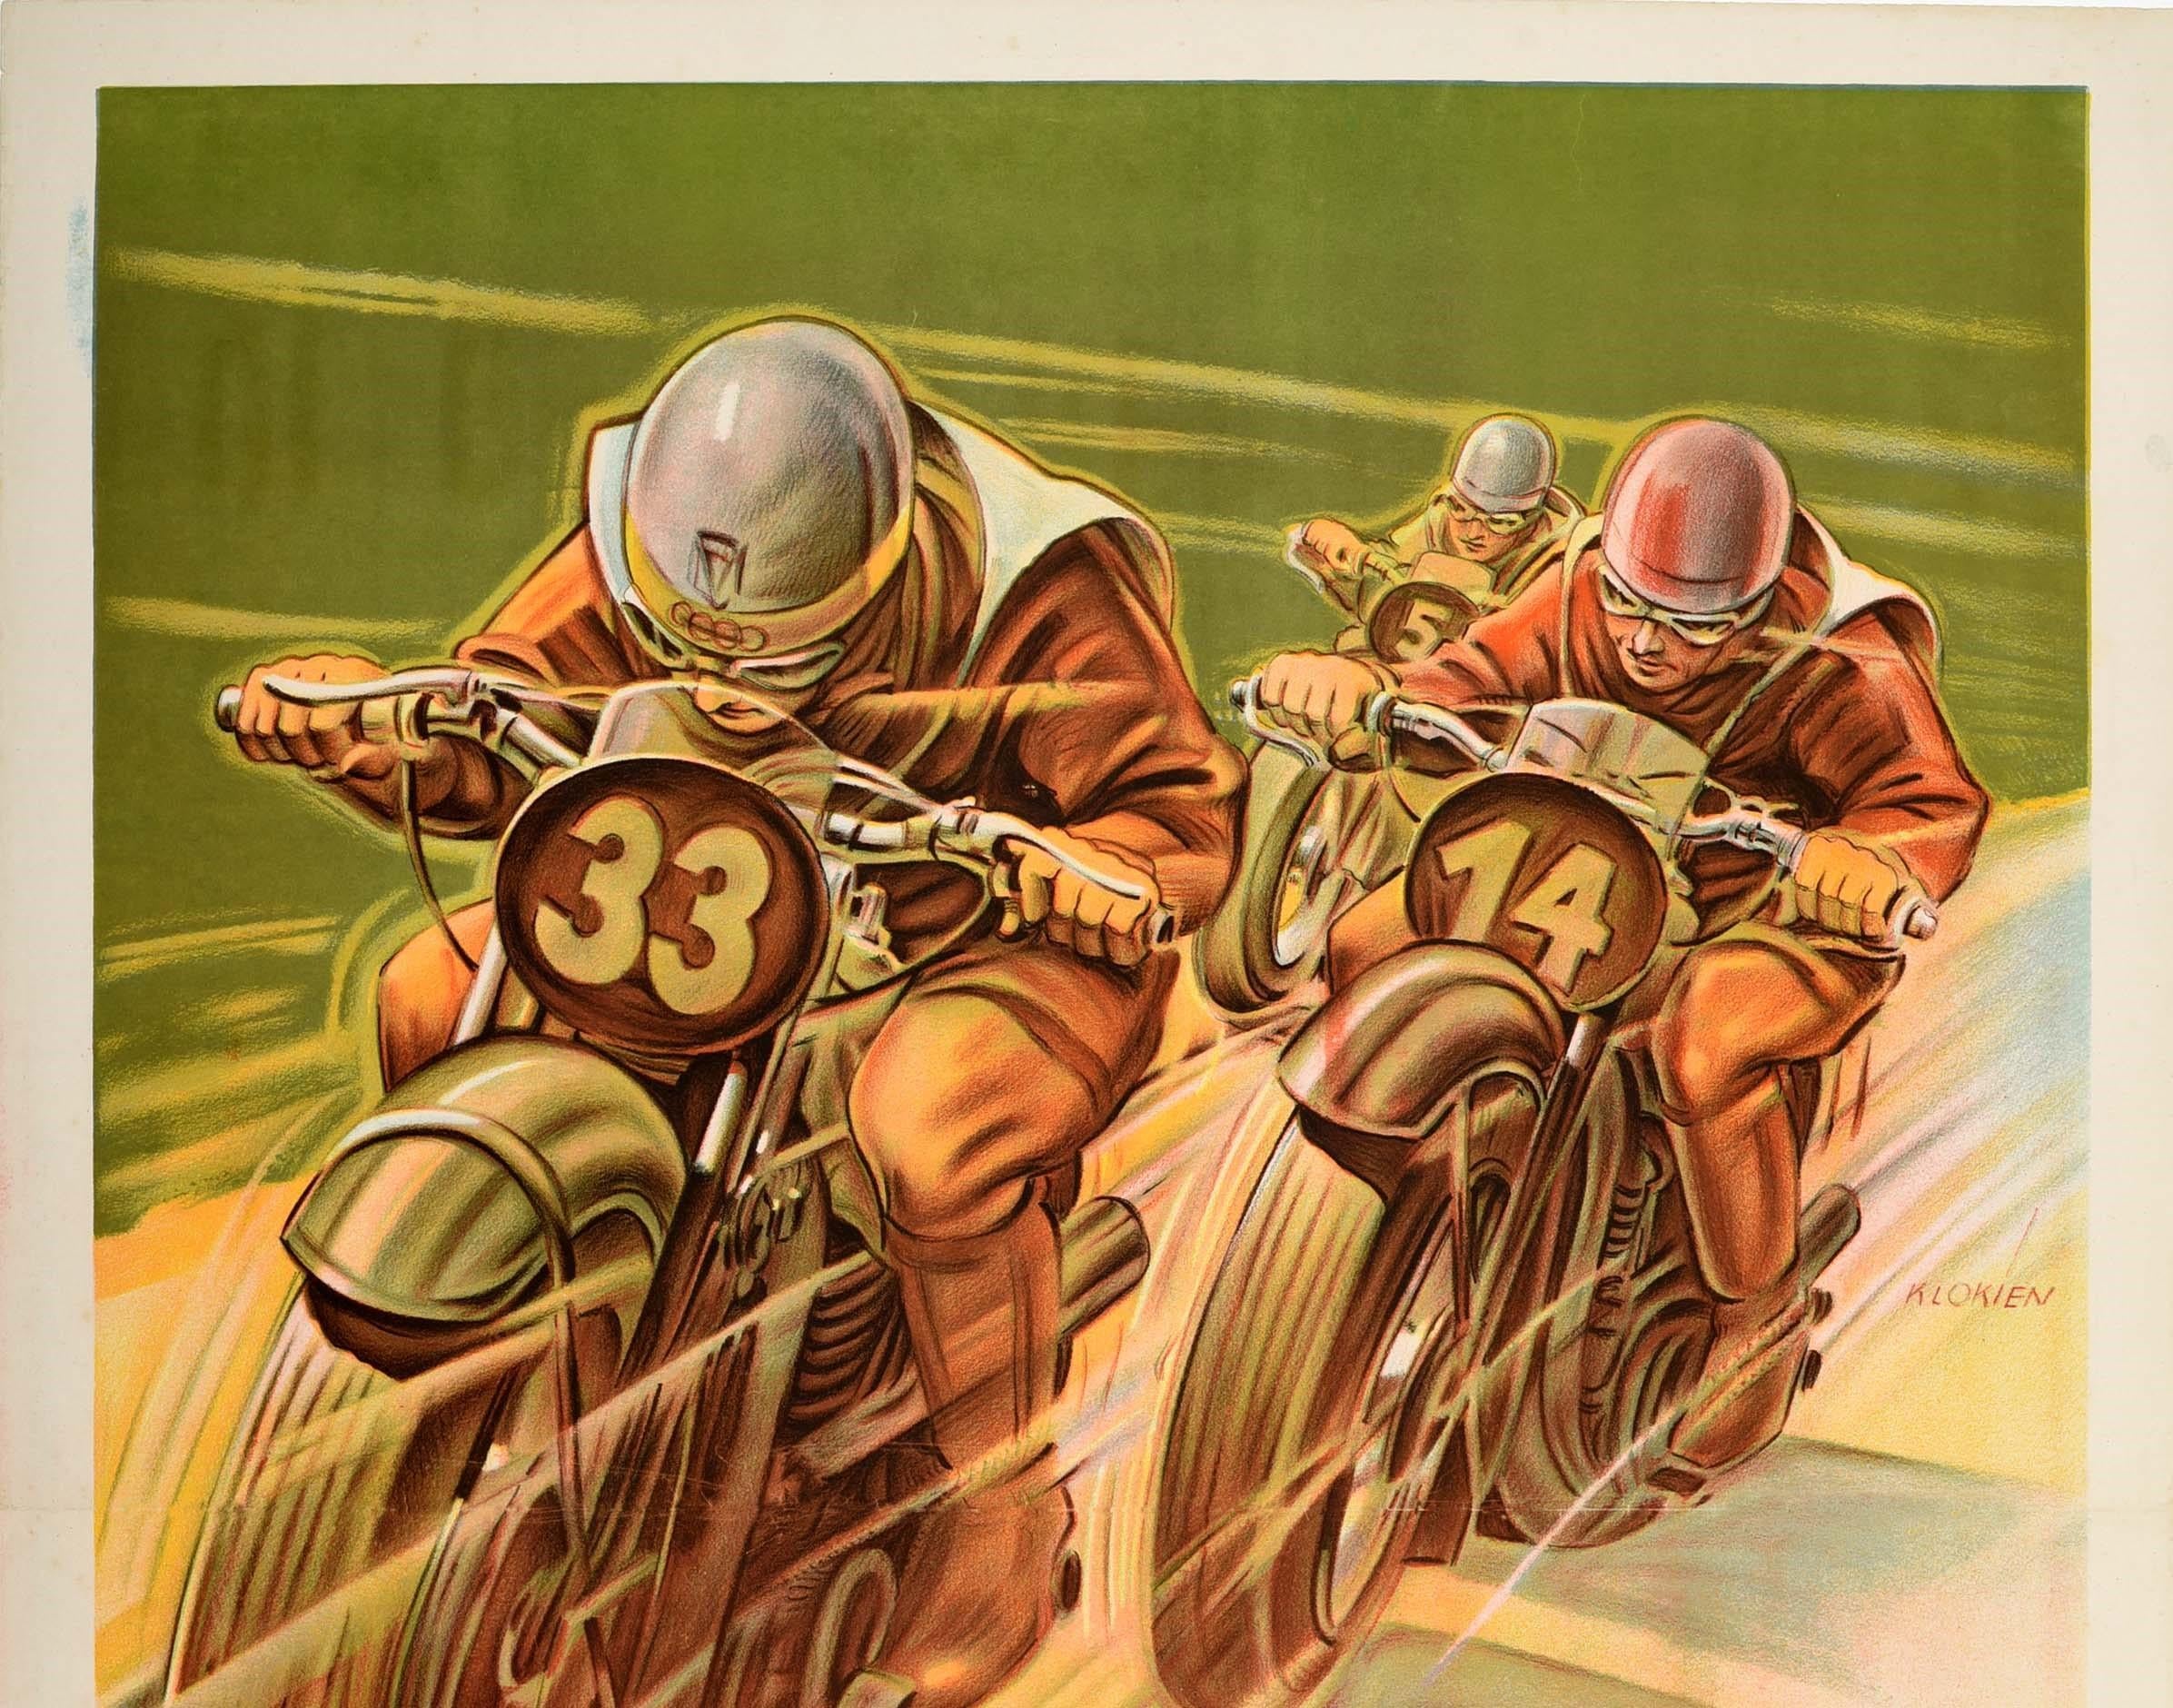 Original Vintage Poster Carreras De Motos VI Gran Premio Cadiz Grand Prix Race - Print by Klokien